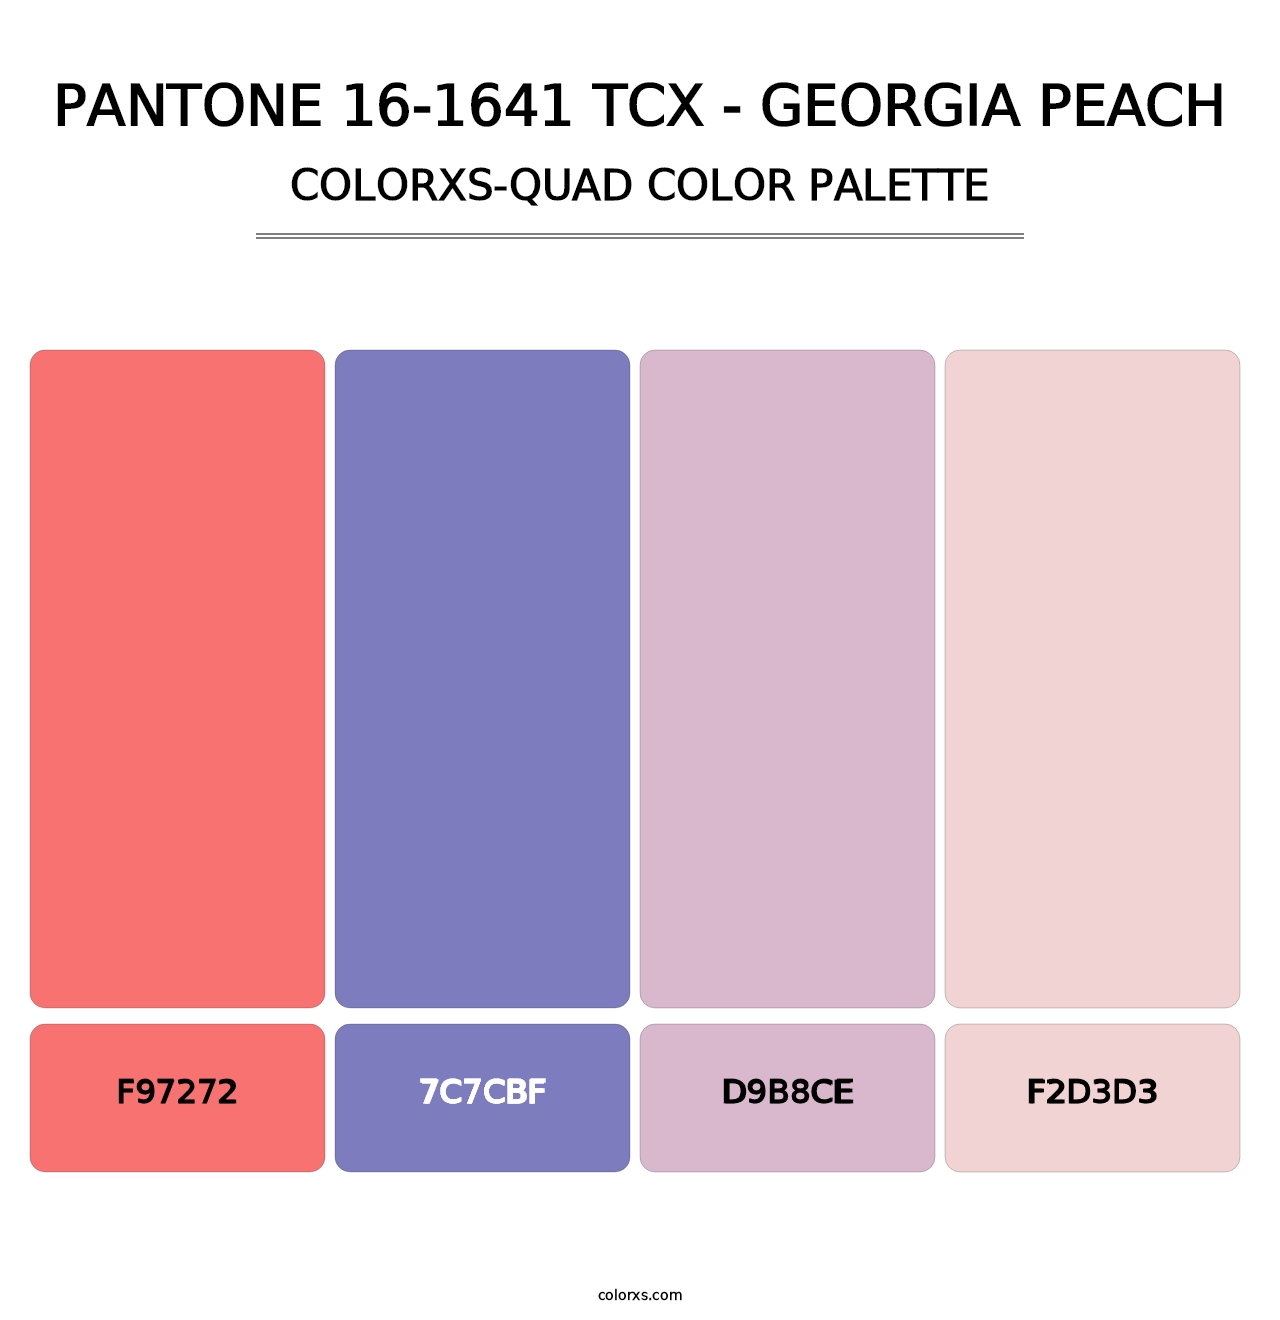 PANTONE 16-1641 TCX - Georgia Peach - Colorxs Quad Palette